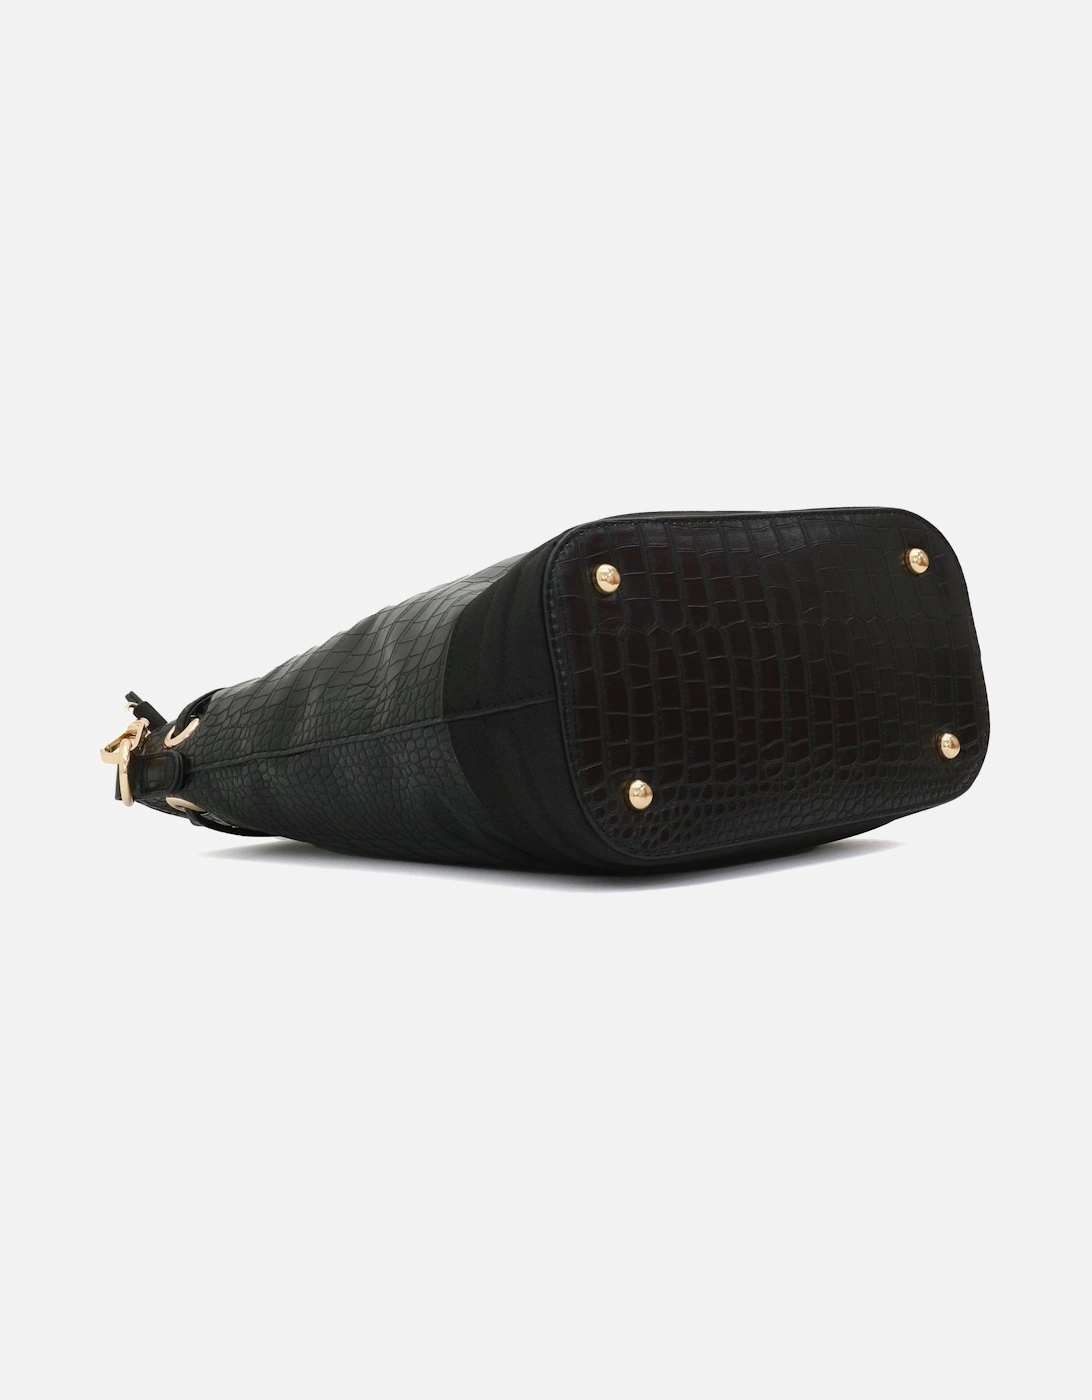 Fire Re Croc Black Deep Shoulder Bag